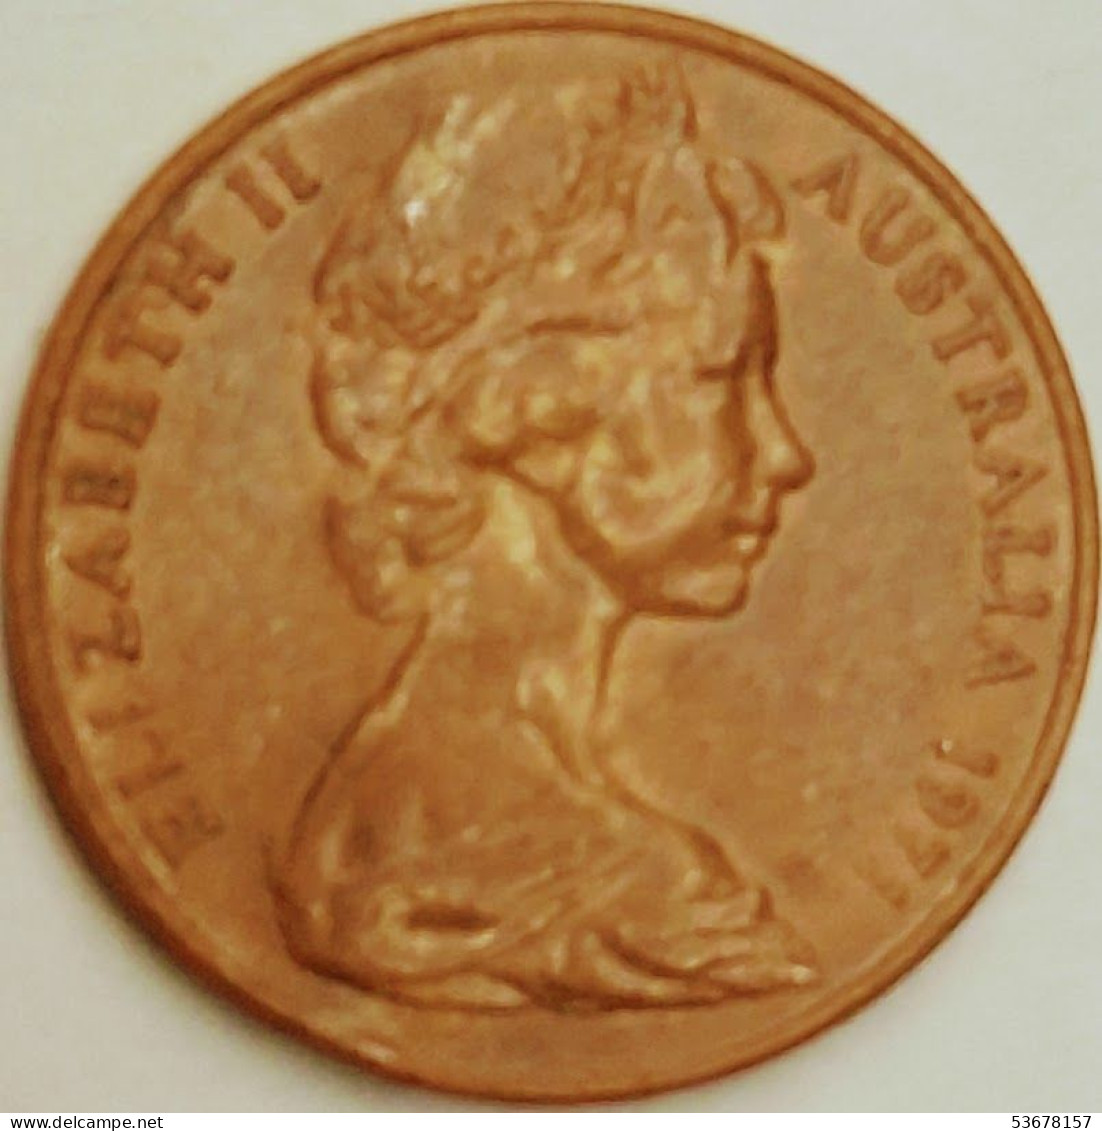 Australia - 2 Cents 1971, KM# 63 (#2794) - 2 Cents